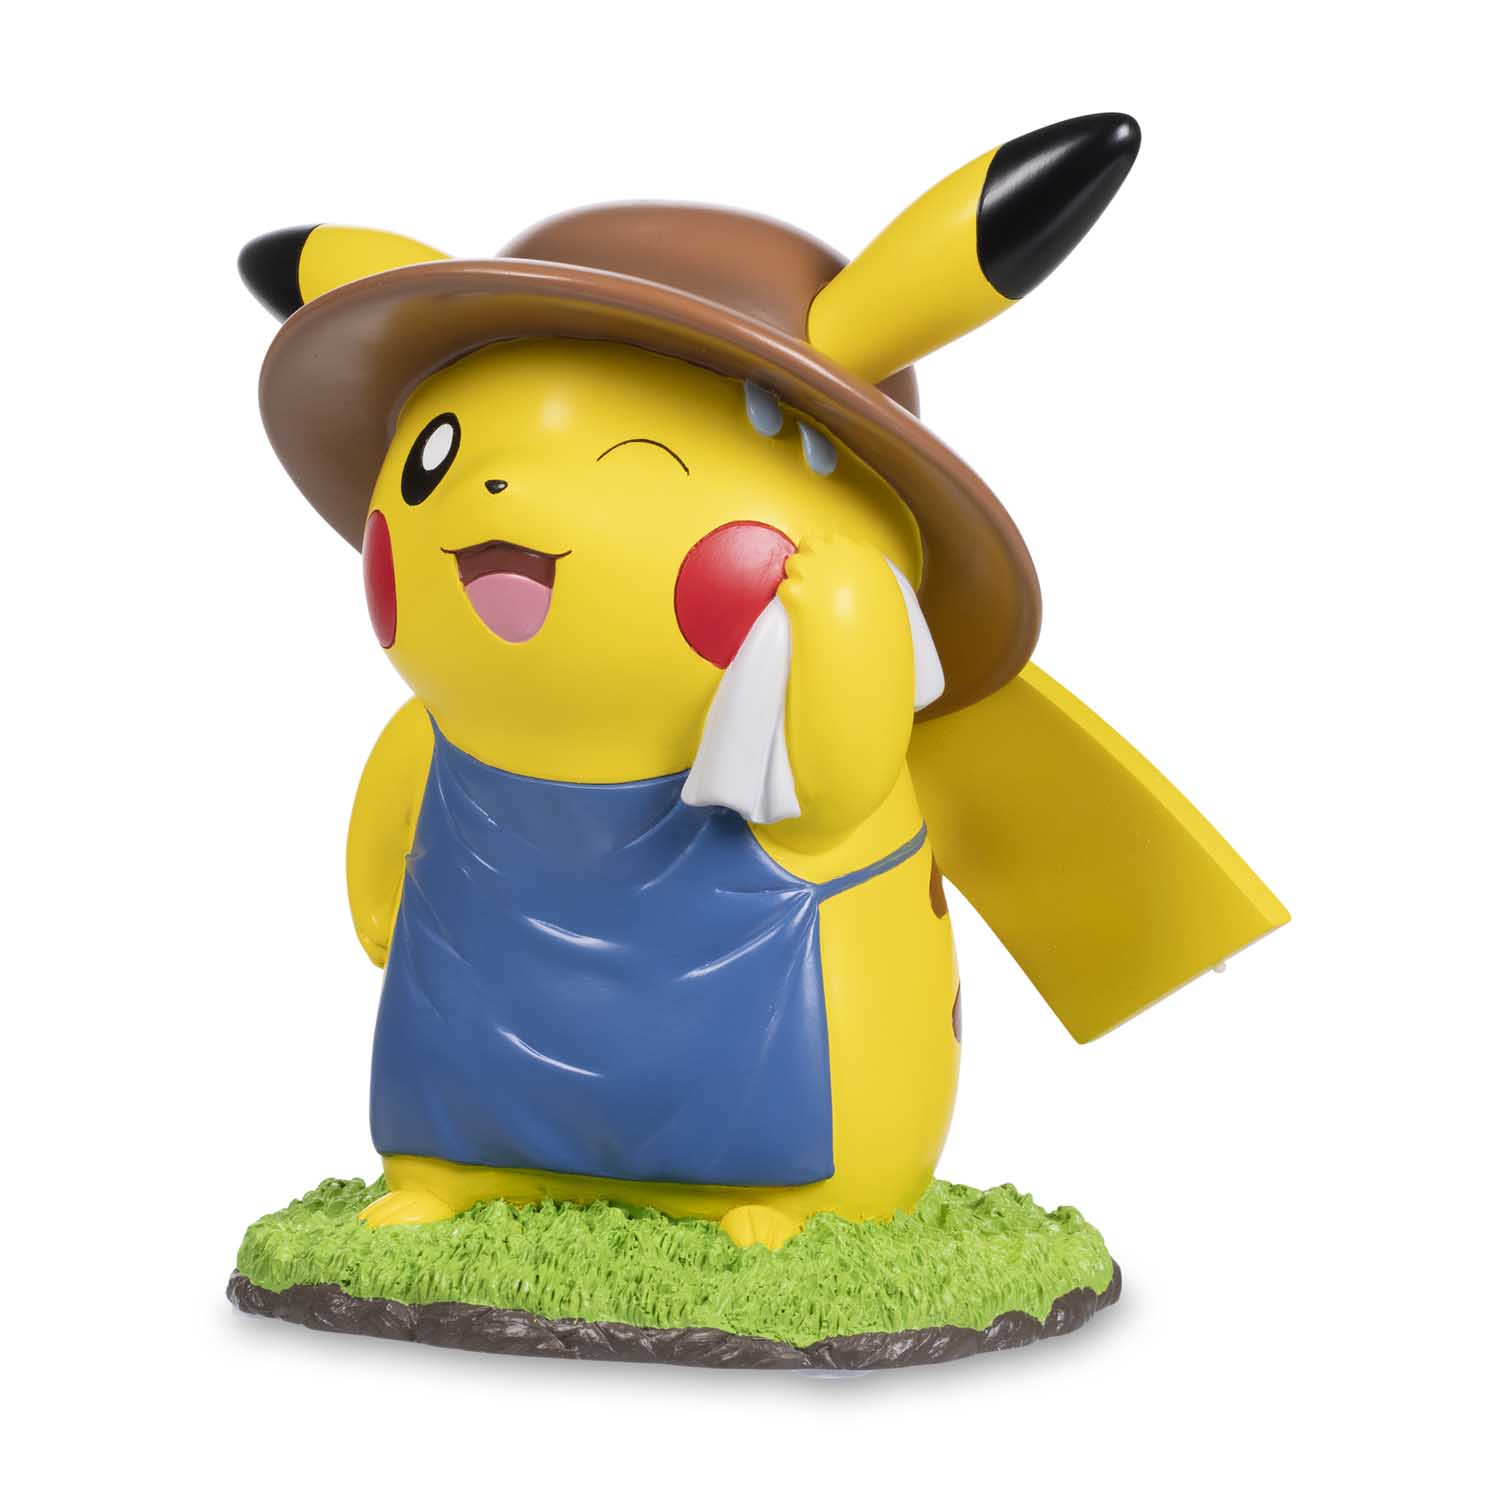 Offiziell Lizenzierte Pokemon Pokémon Kanto Vinyl Figur Statue Bisasam Bulbasaur 